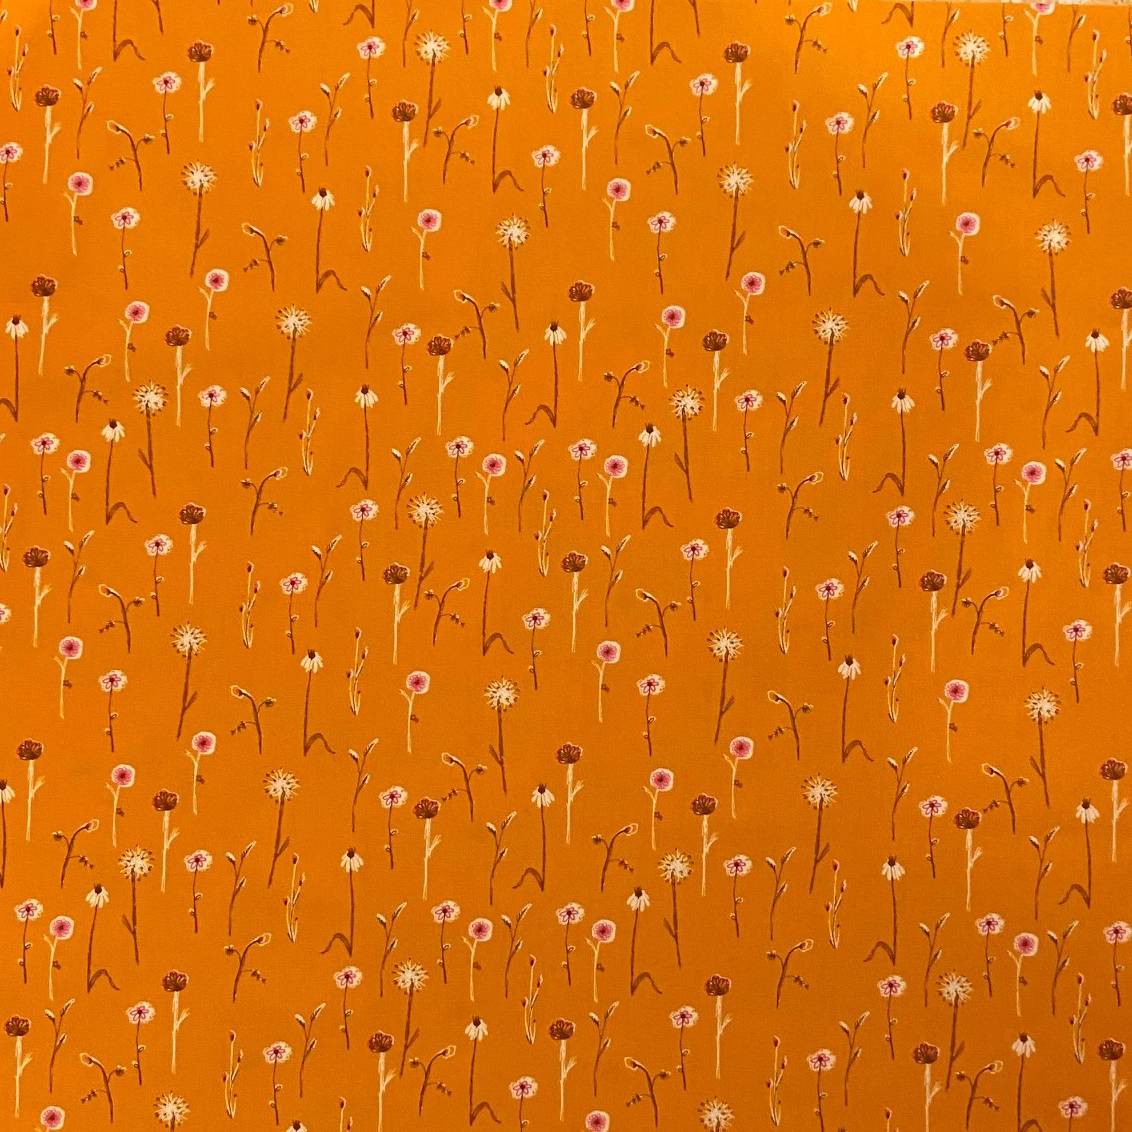 Precuts: Heather Ross 'Lightning Bugs' Dandelions in Orange